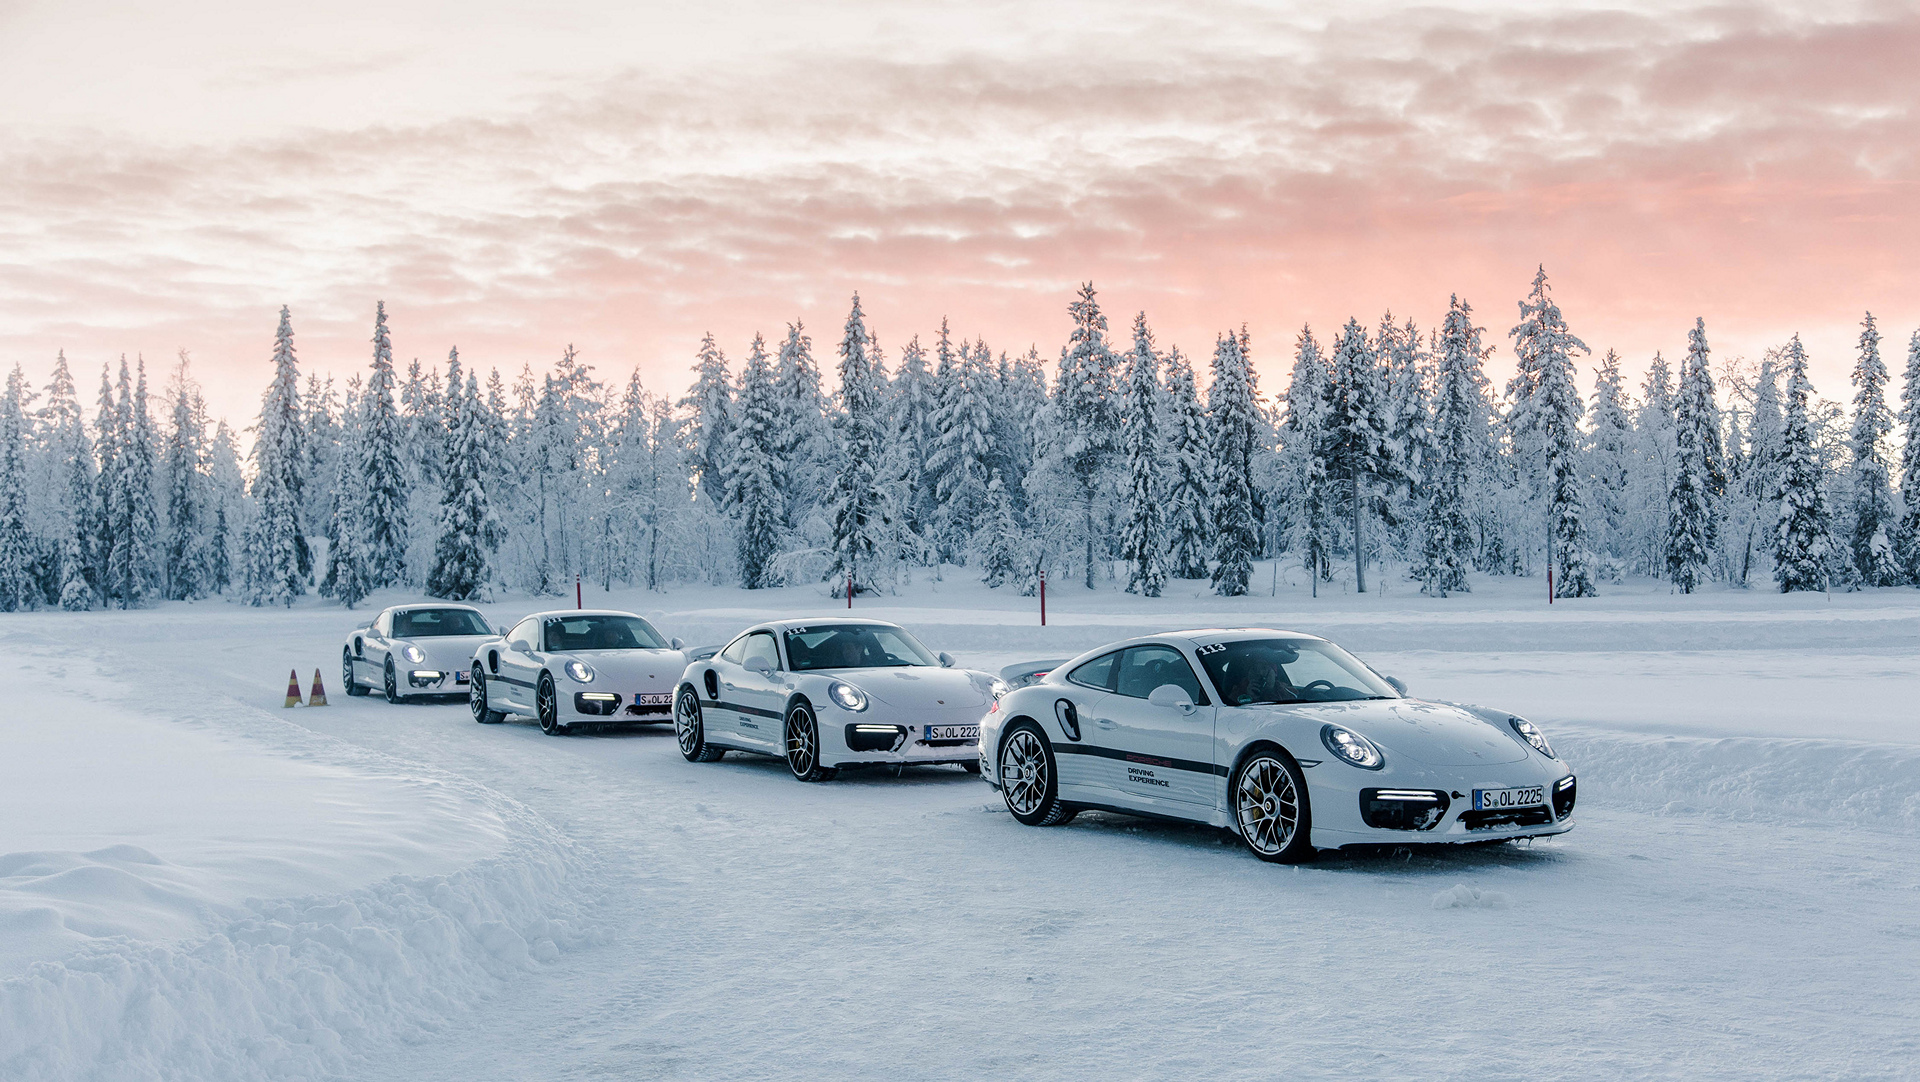 911 Turbo S, Porsche Driving Experience Winter, Levi, Finland © Dr. Ing. h.c. F. Porsche AG